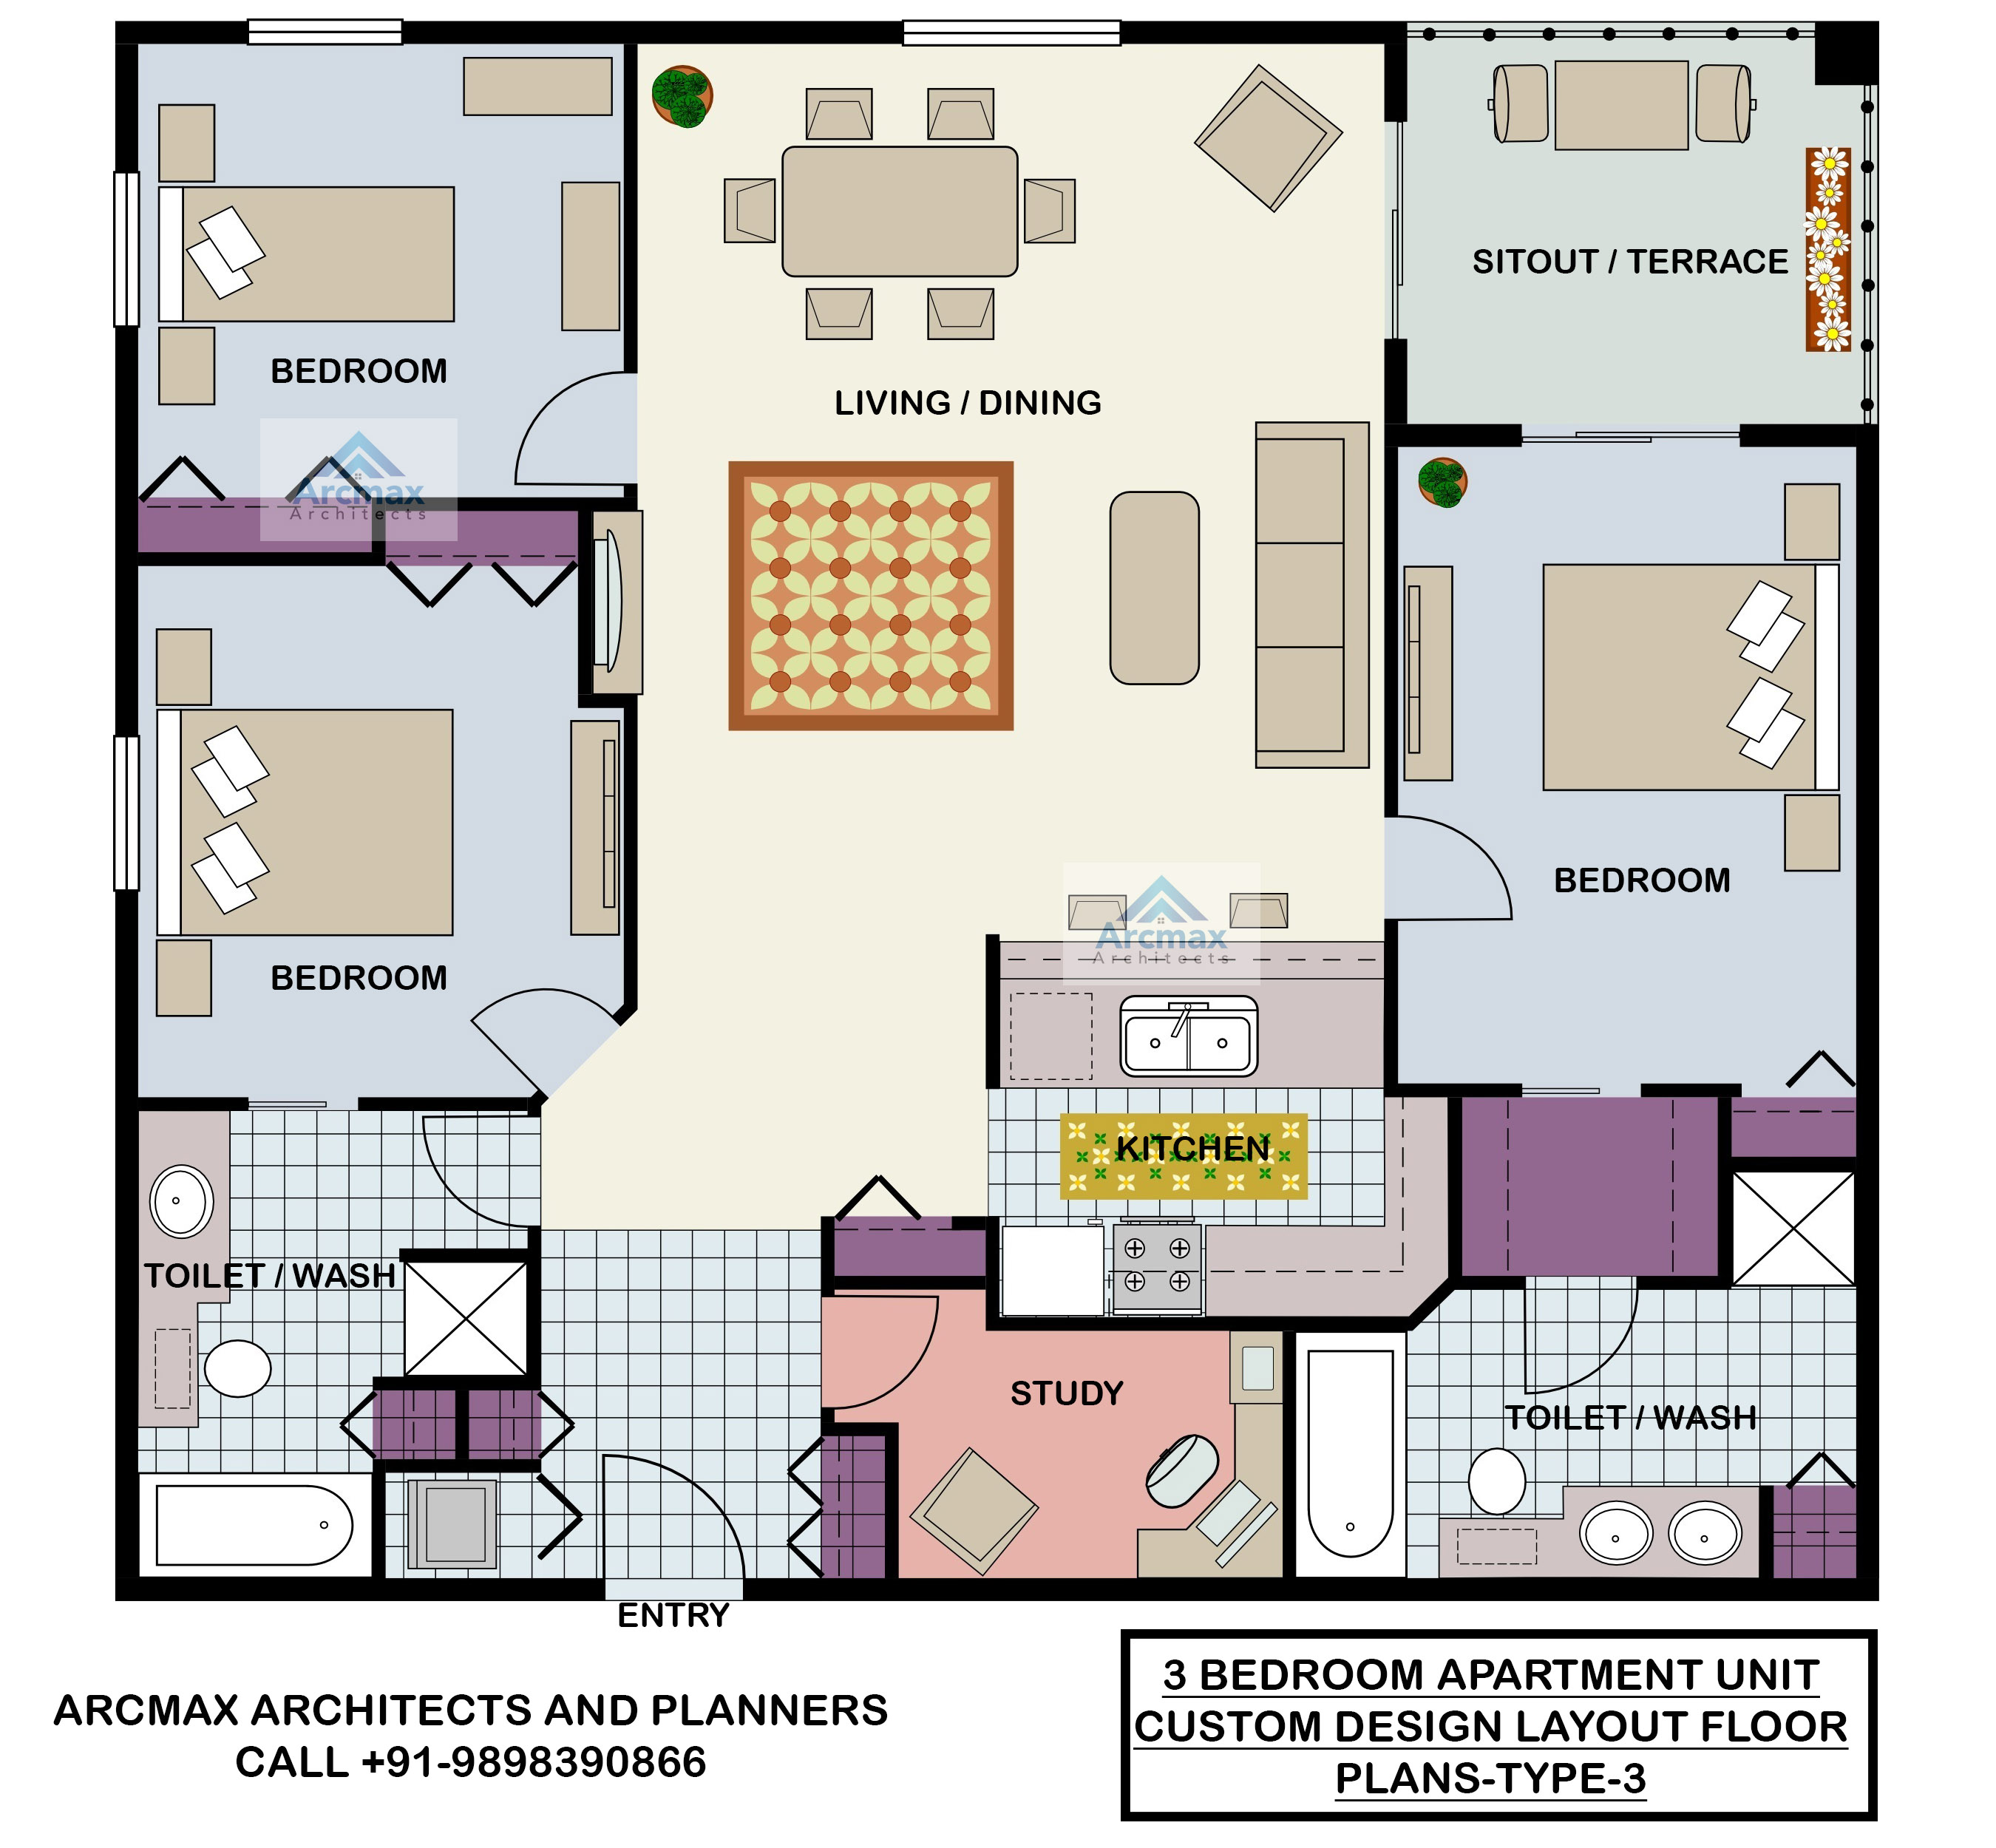 3 Bedroom Apartment Unit Custom Design Layout Floor Plans Type 3 